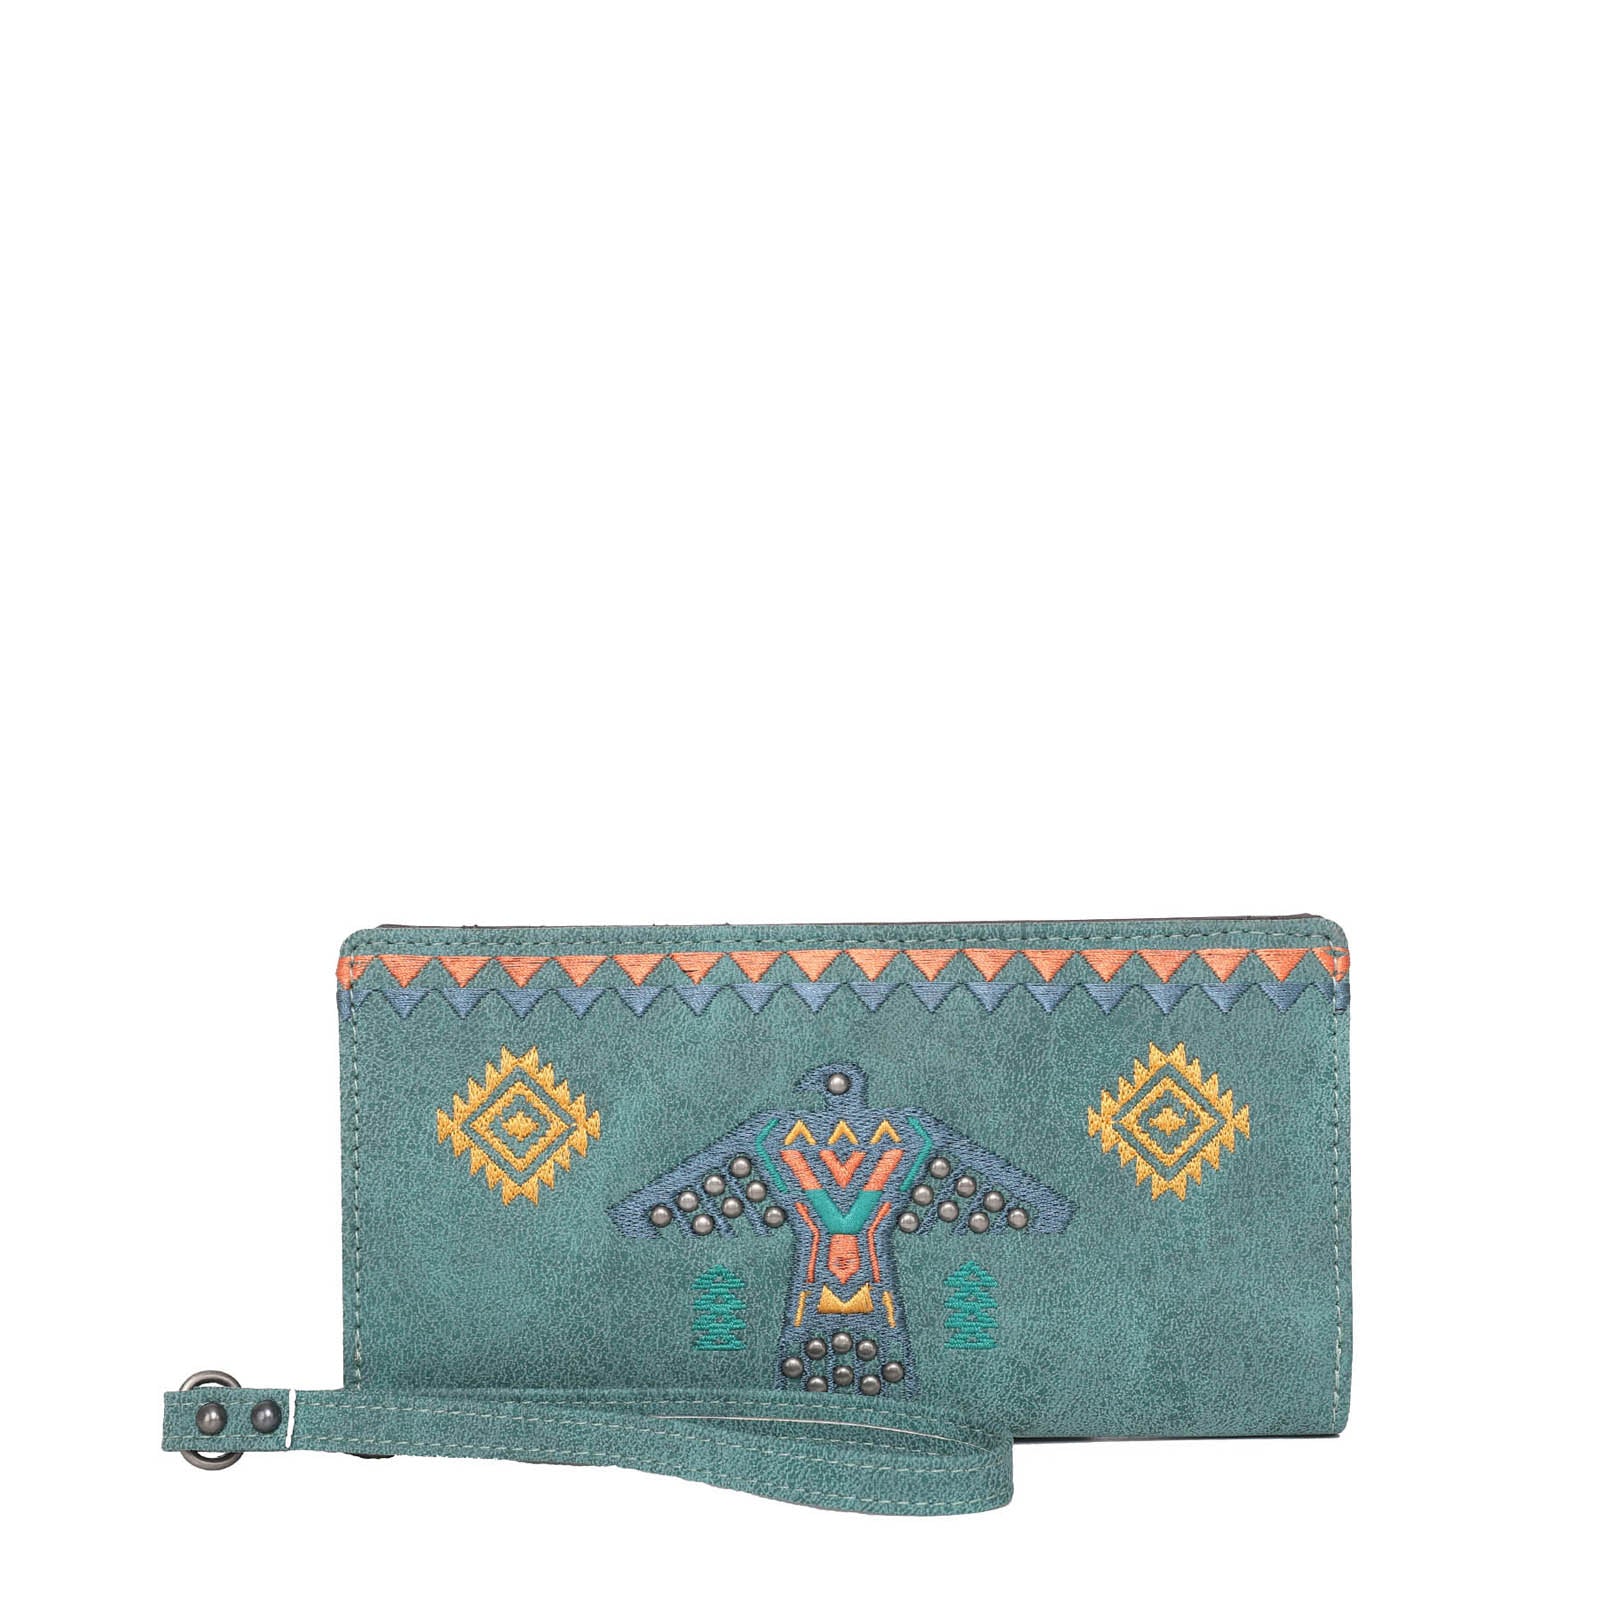 WG36-W039 Wrangler Embroidered Aztec Eagle Fringe Collection Wallet ...